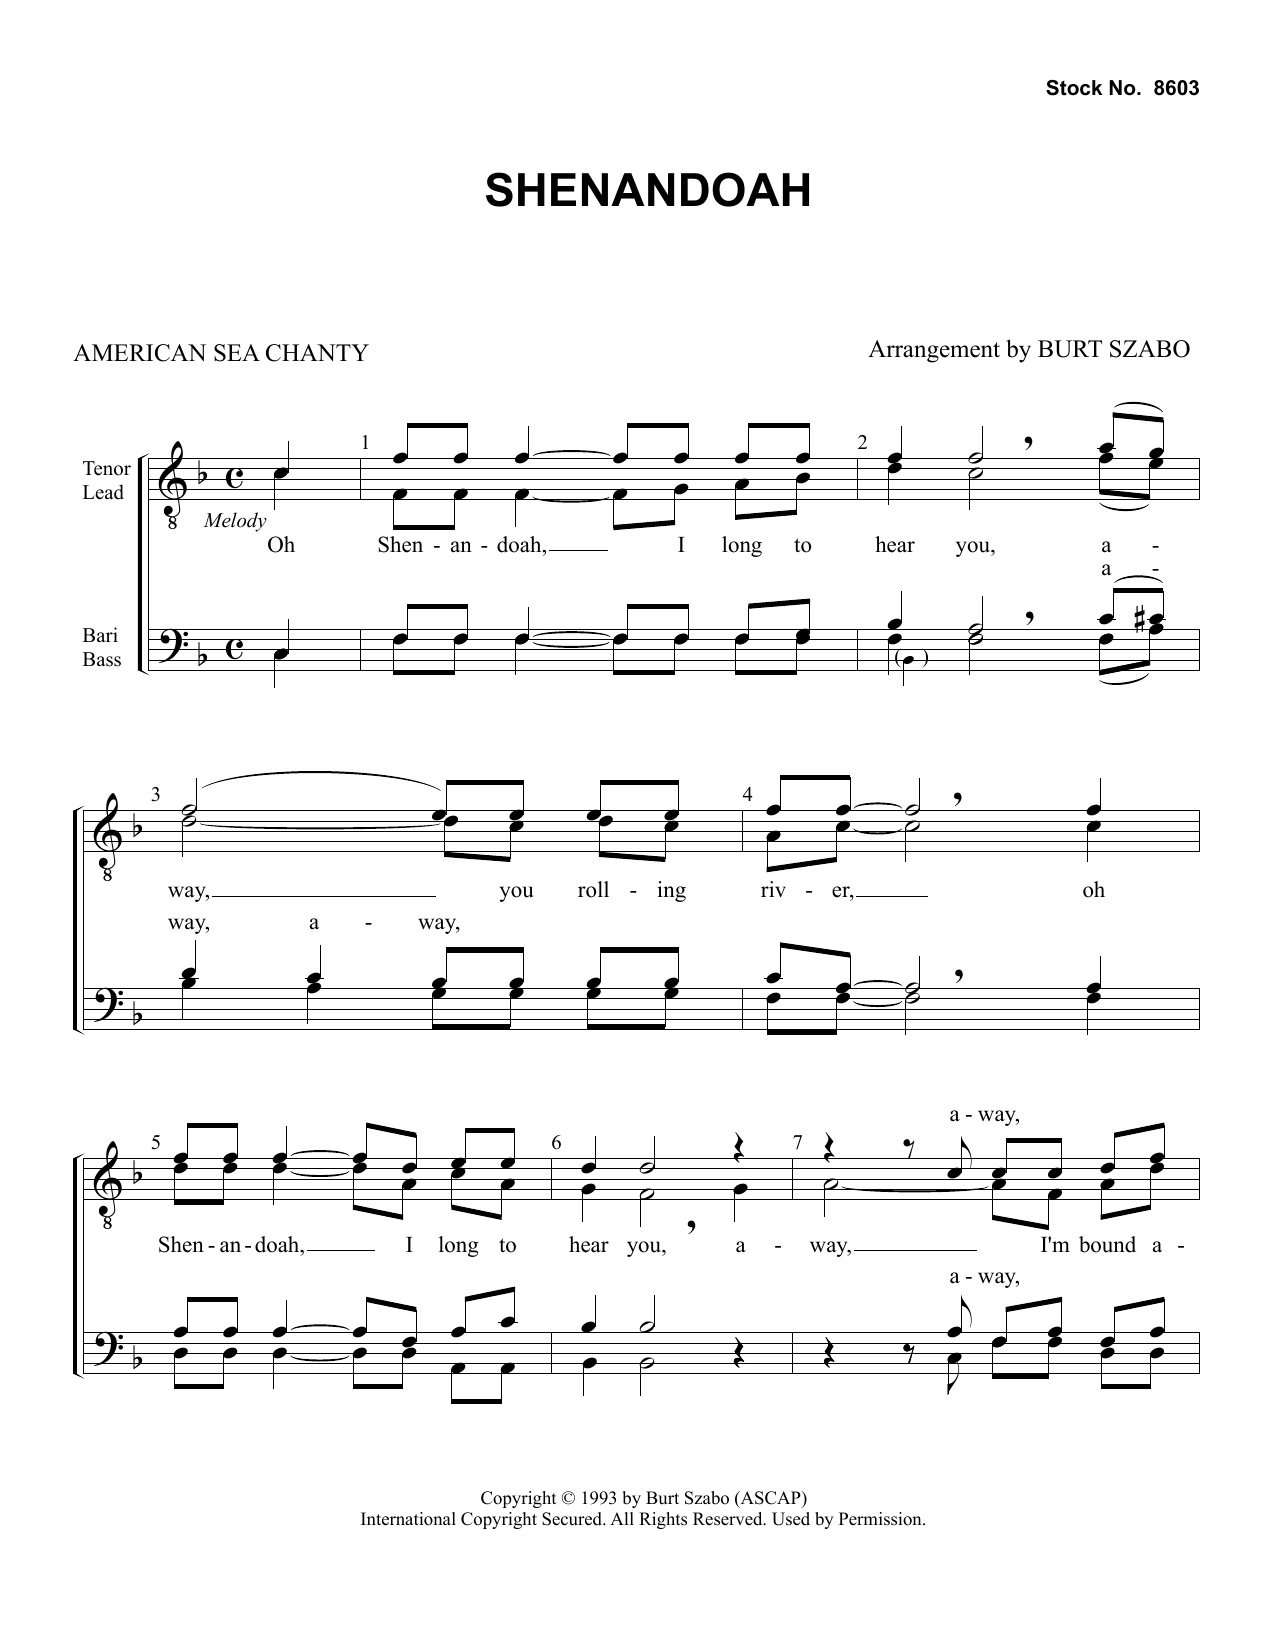 American Sea Chanty Shenandoah (arr. Burt Szabo) Sheet Music Notes & Chords for SSAA Choir - Download or Print PDF